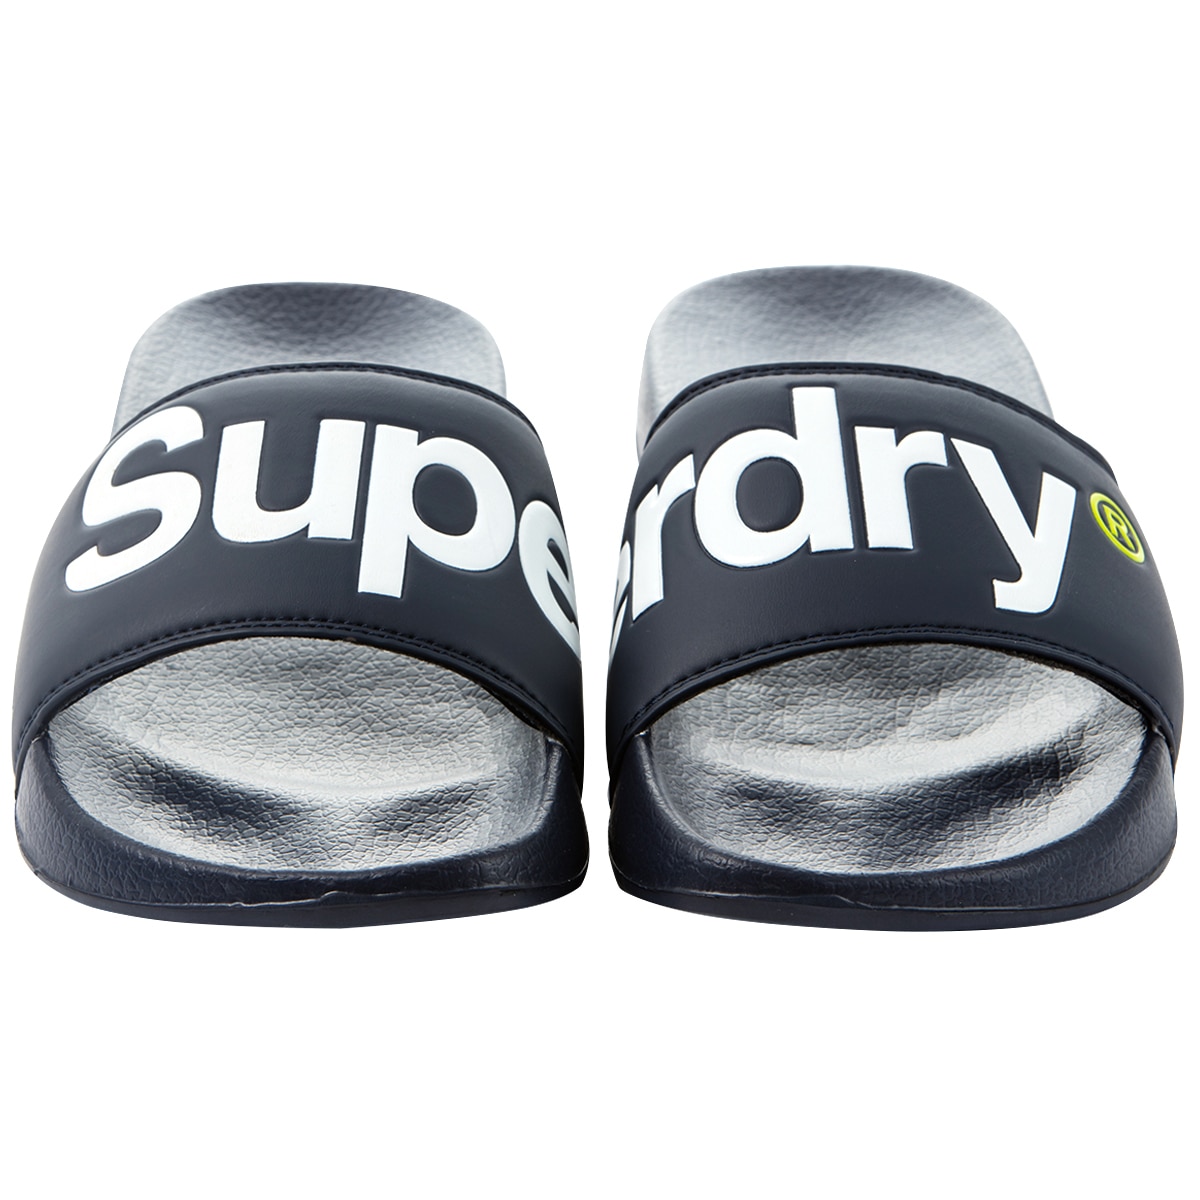 Superdry Men's Pool Slide Slipper Costco Australia